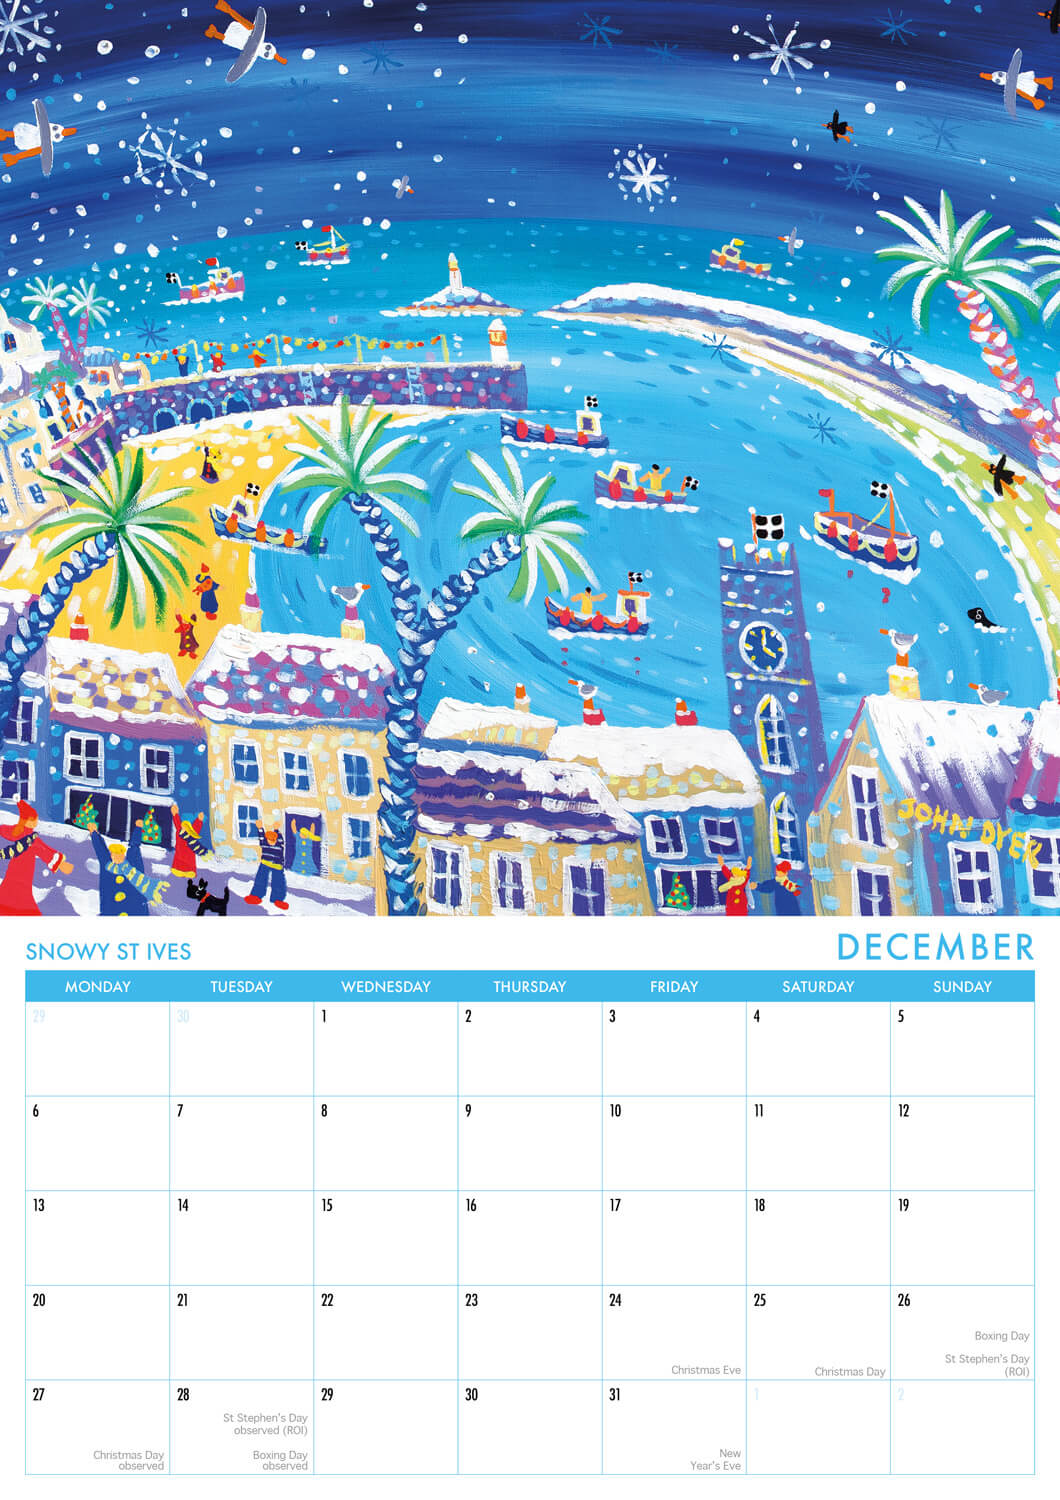 2021 Calendar of Cornwall by Cornish artist John Dyer